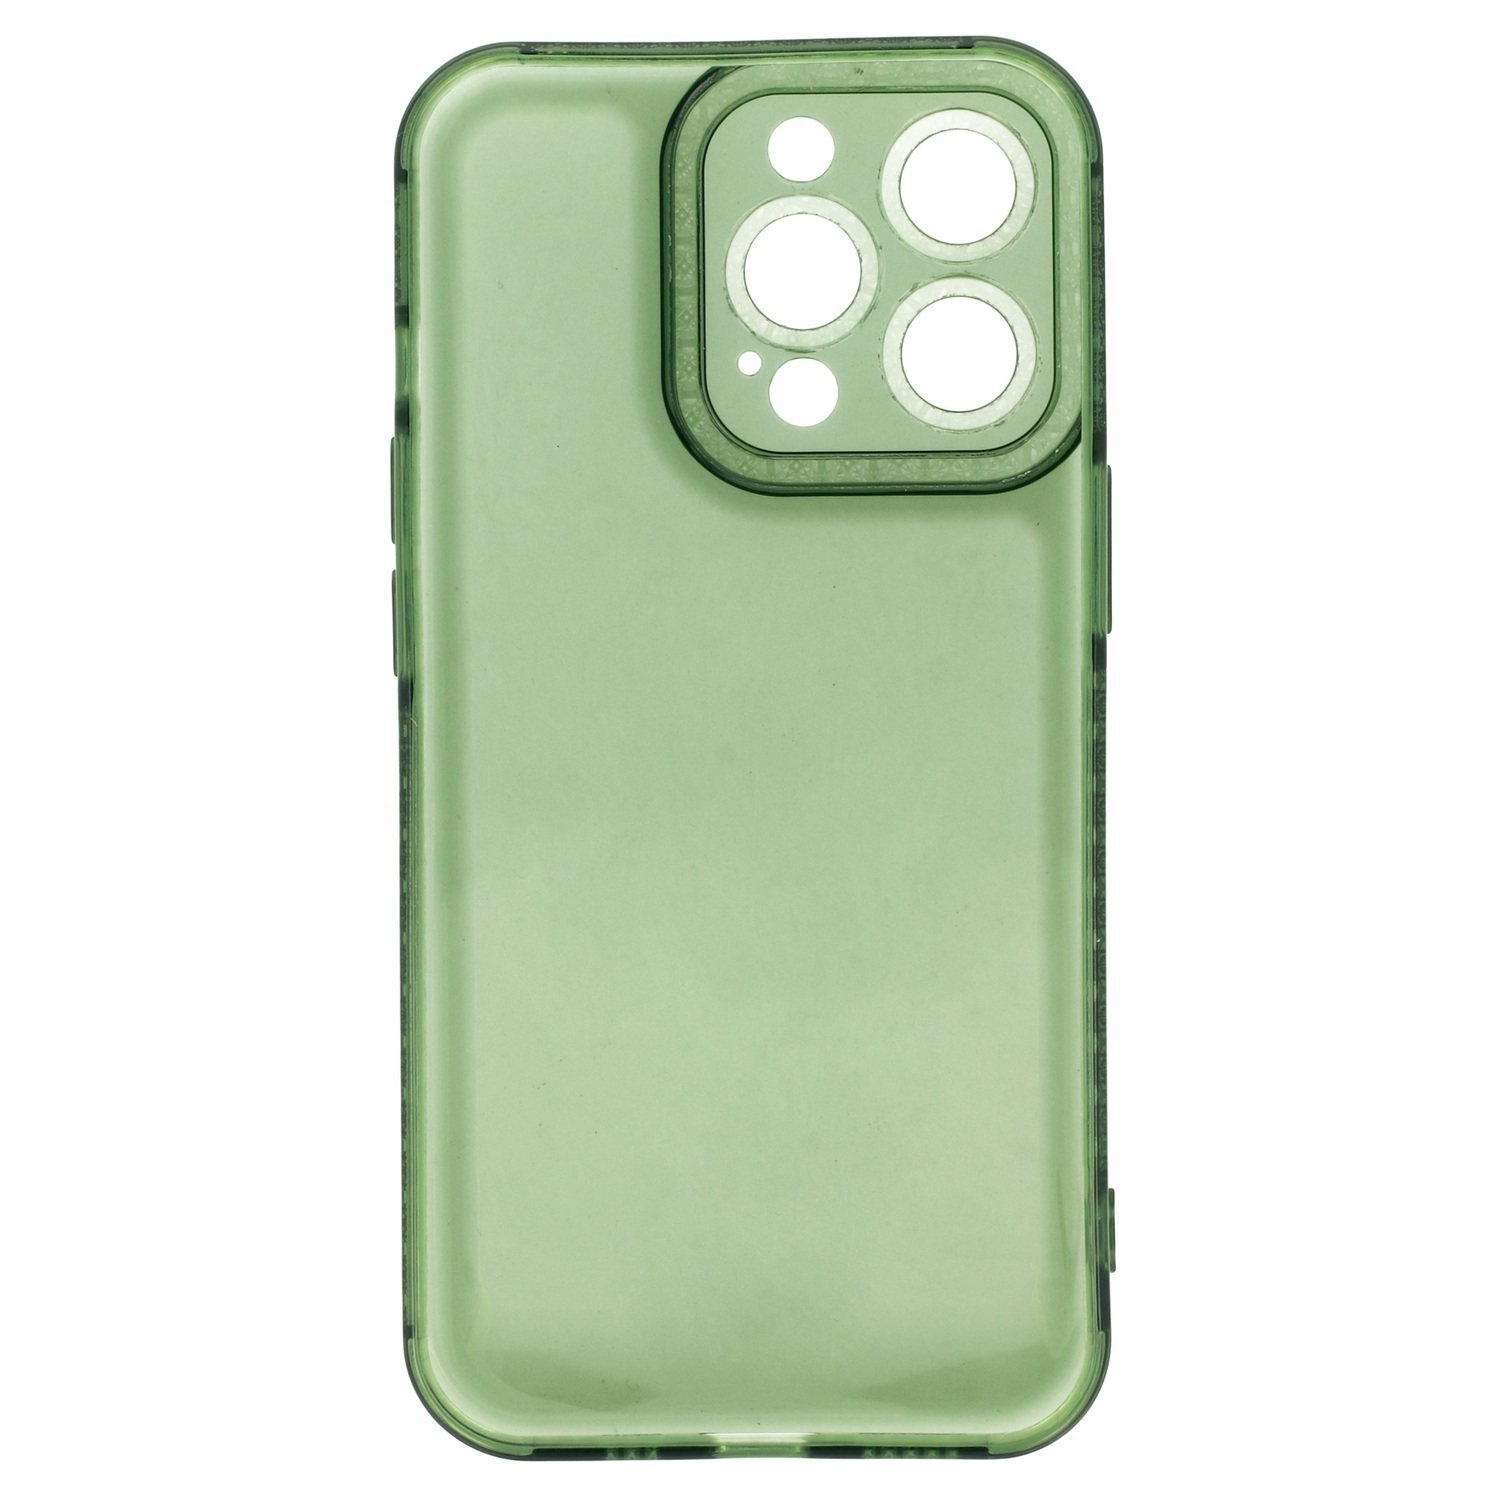 Pokrowiec etui silikonowe Crystal Diamond Case zielone APPLE iPhone XR / 5